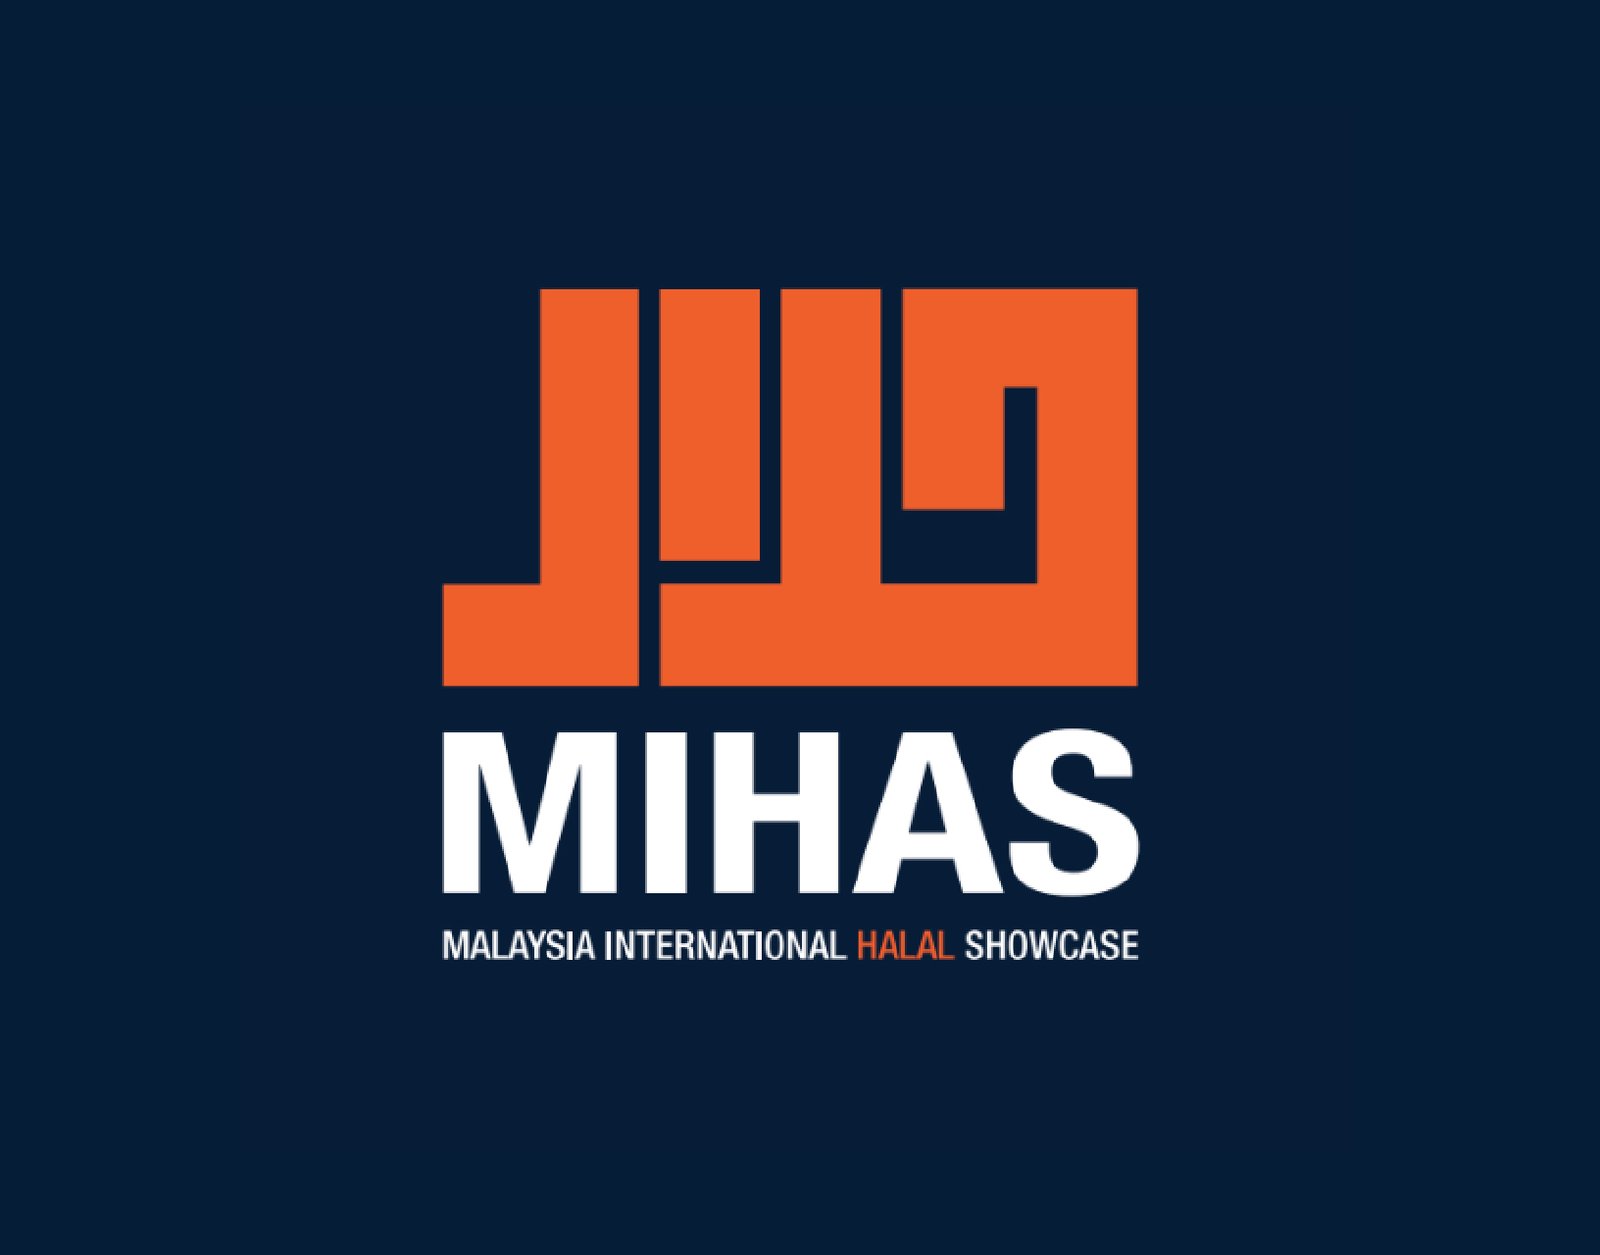 MIHAS – Malaysia International Halal Showcase